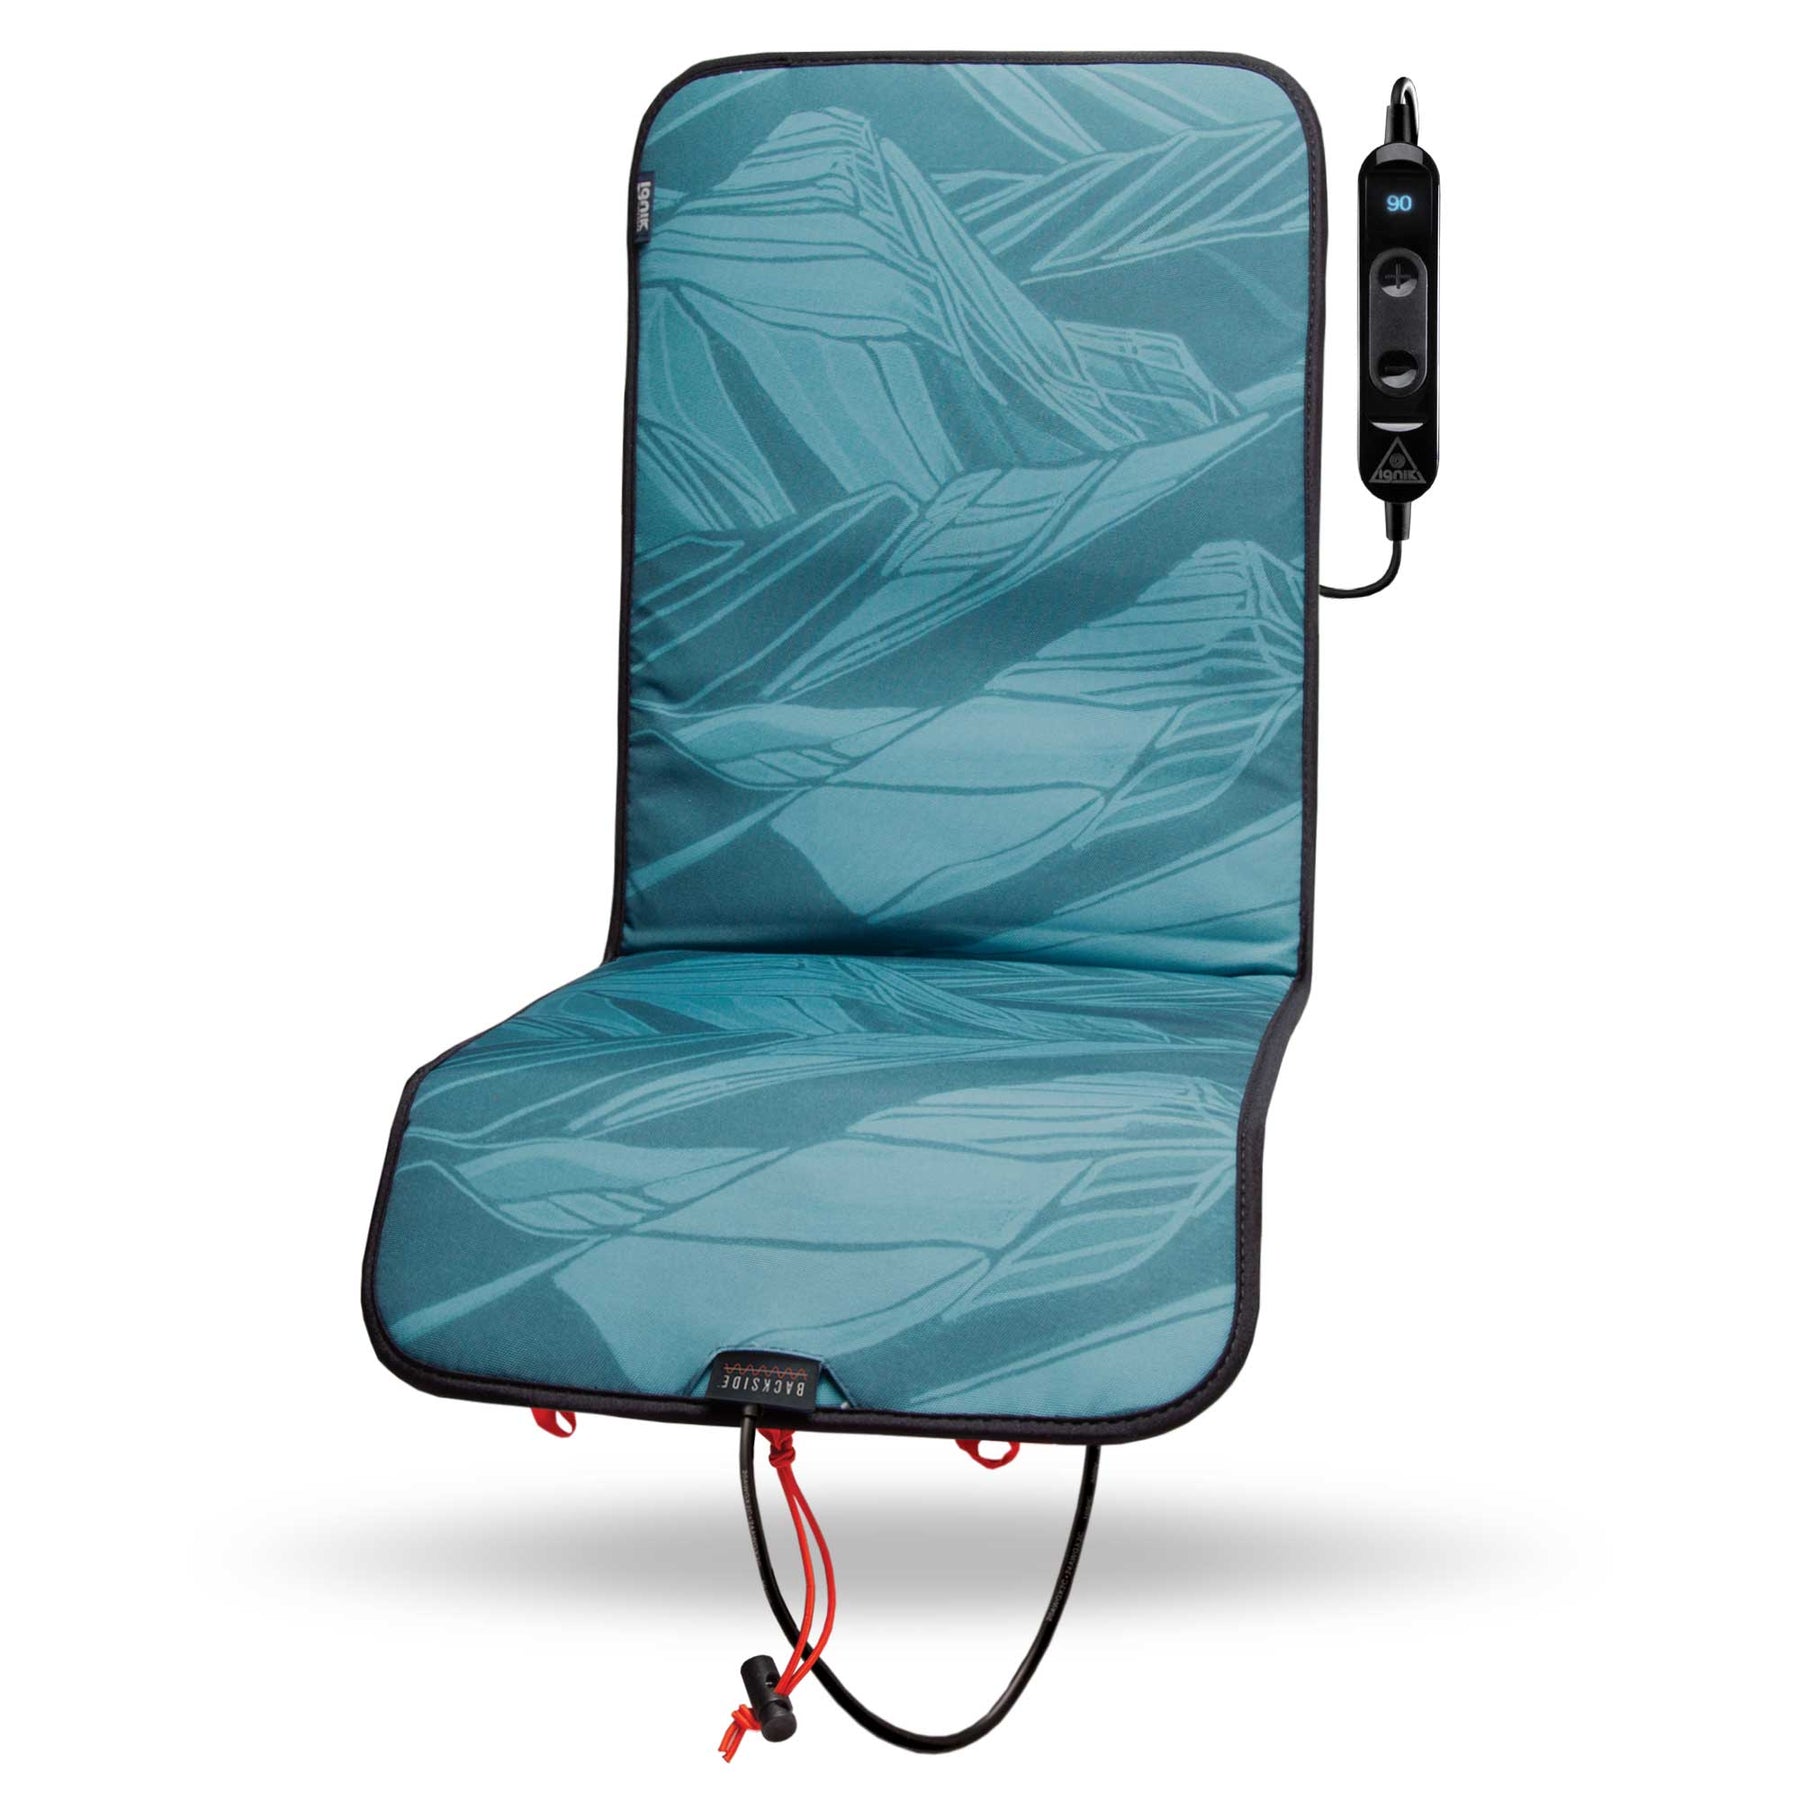 Heated Seat Cushion Seat Pad Heated Bleacher Cushion Portable